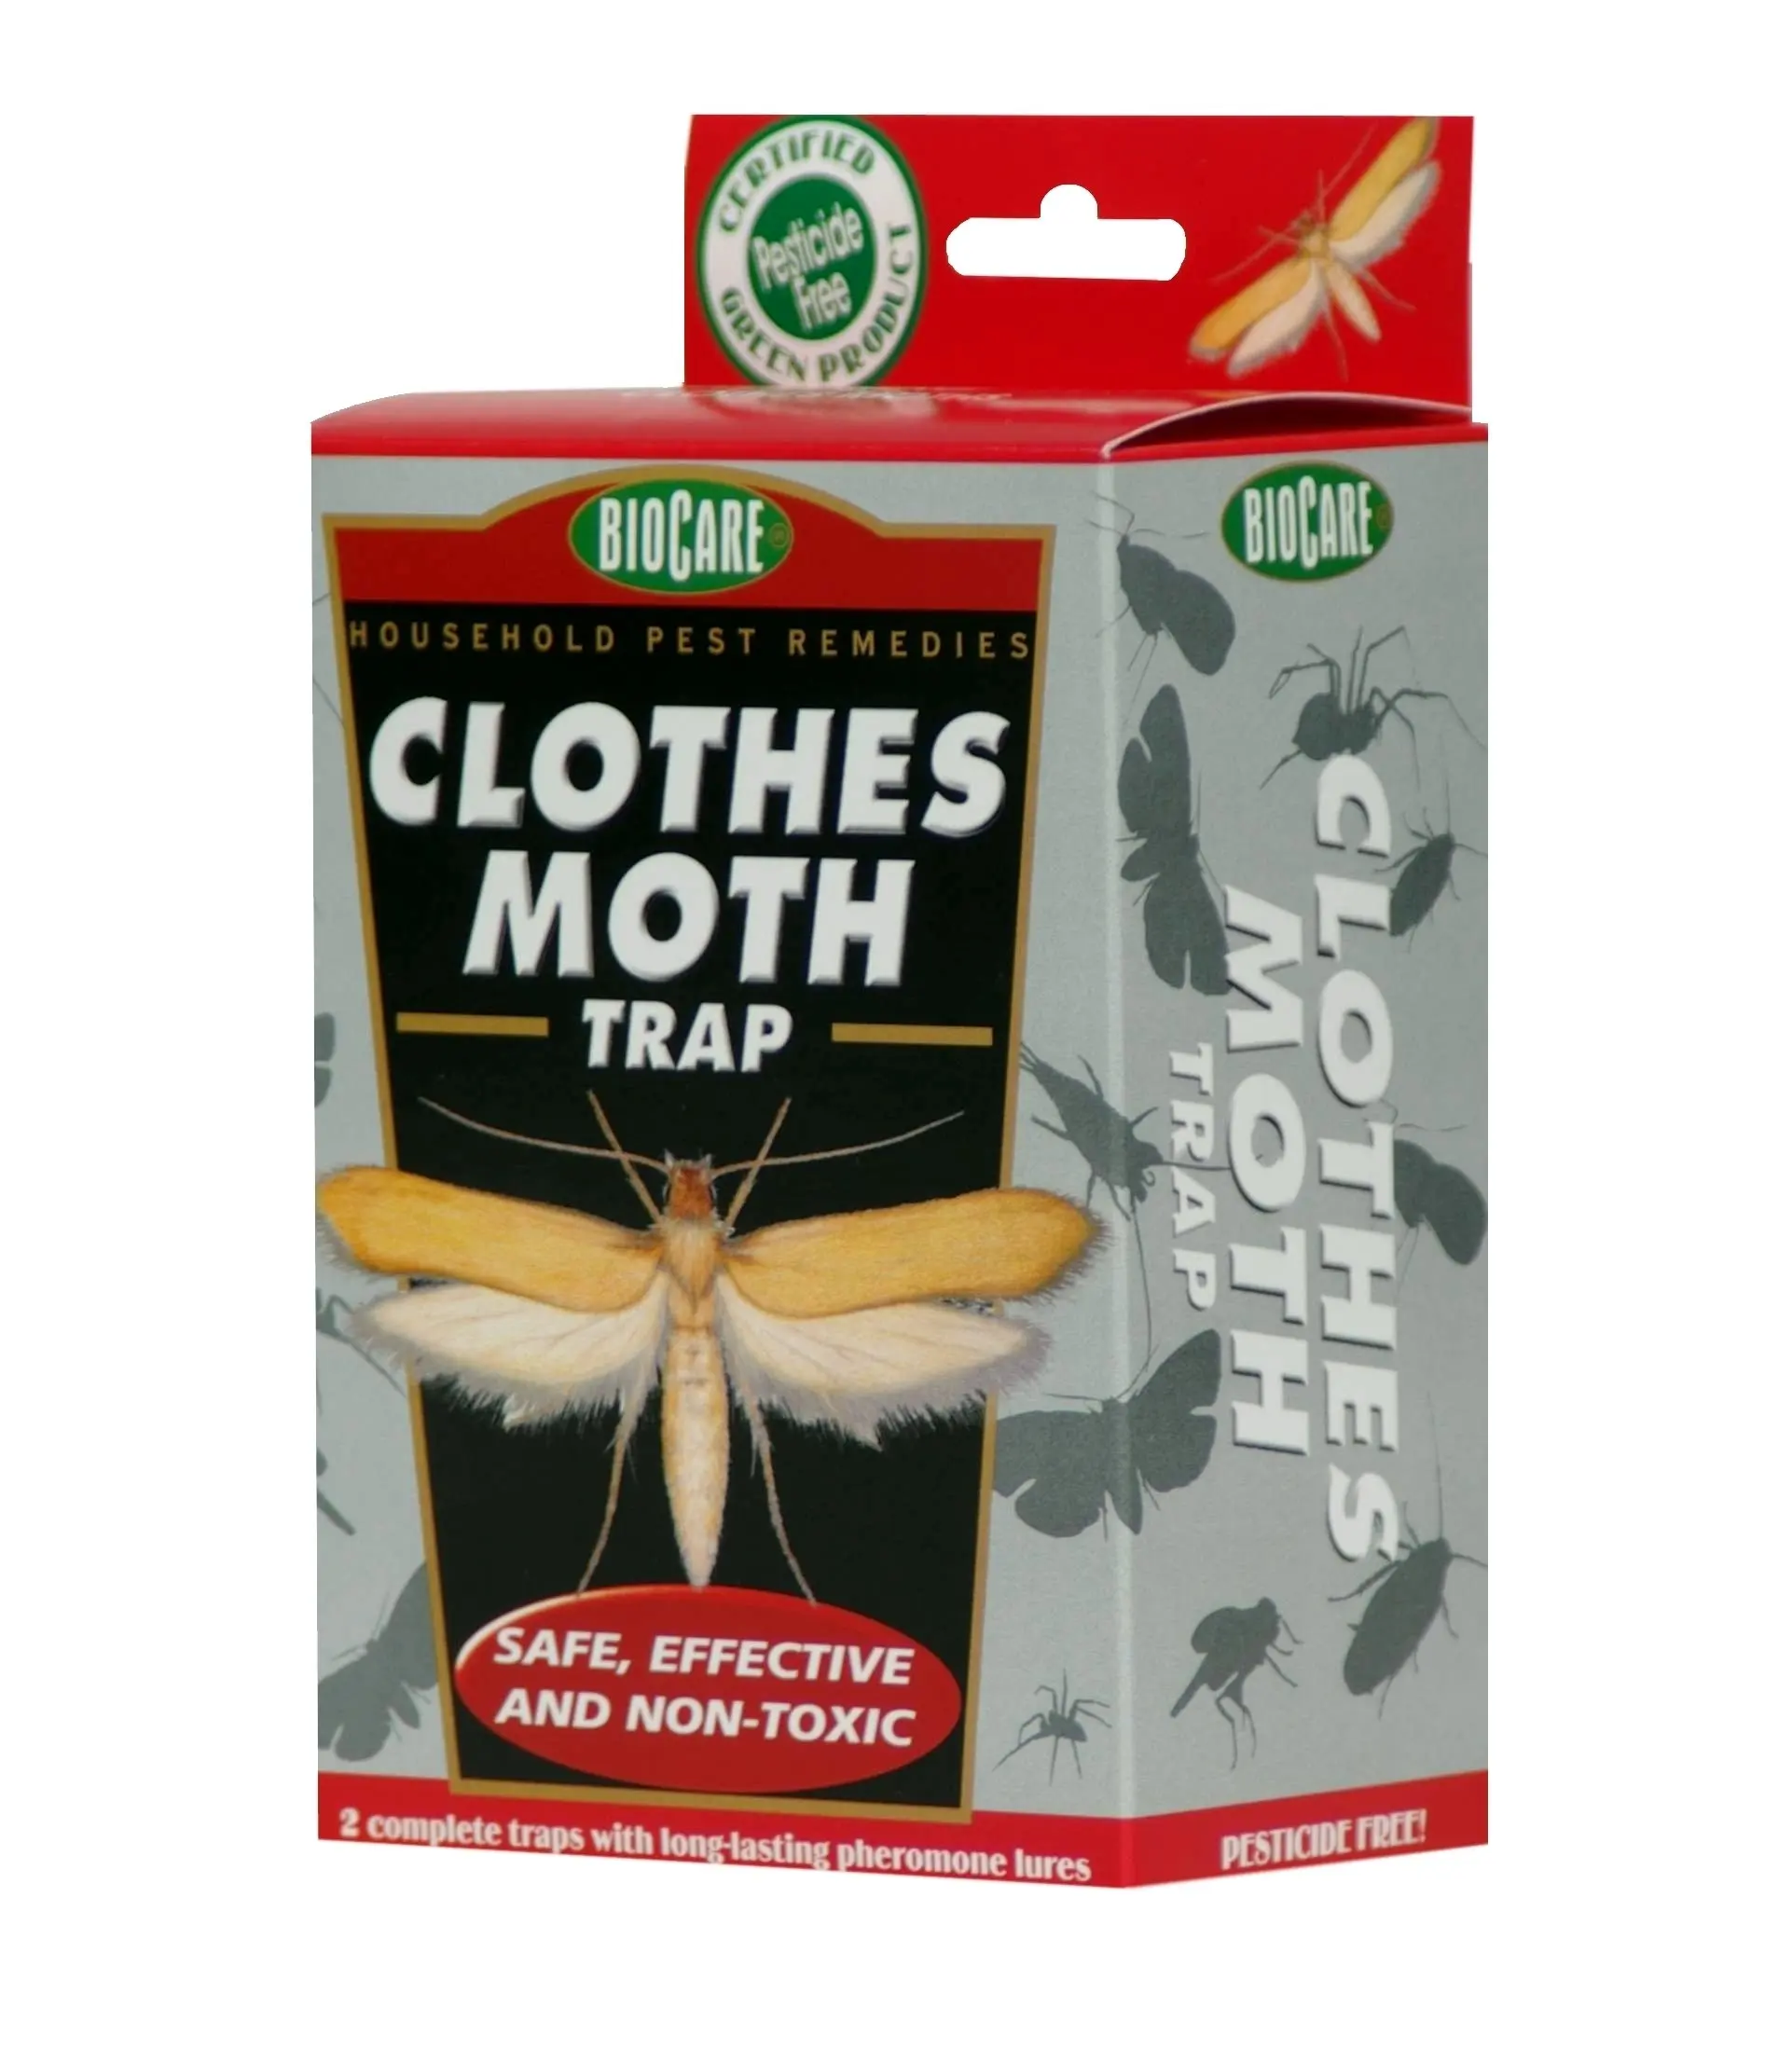 9.68. Springstar S1524 Jumbo Clothes Moth Trap. 